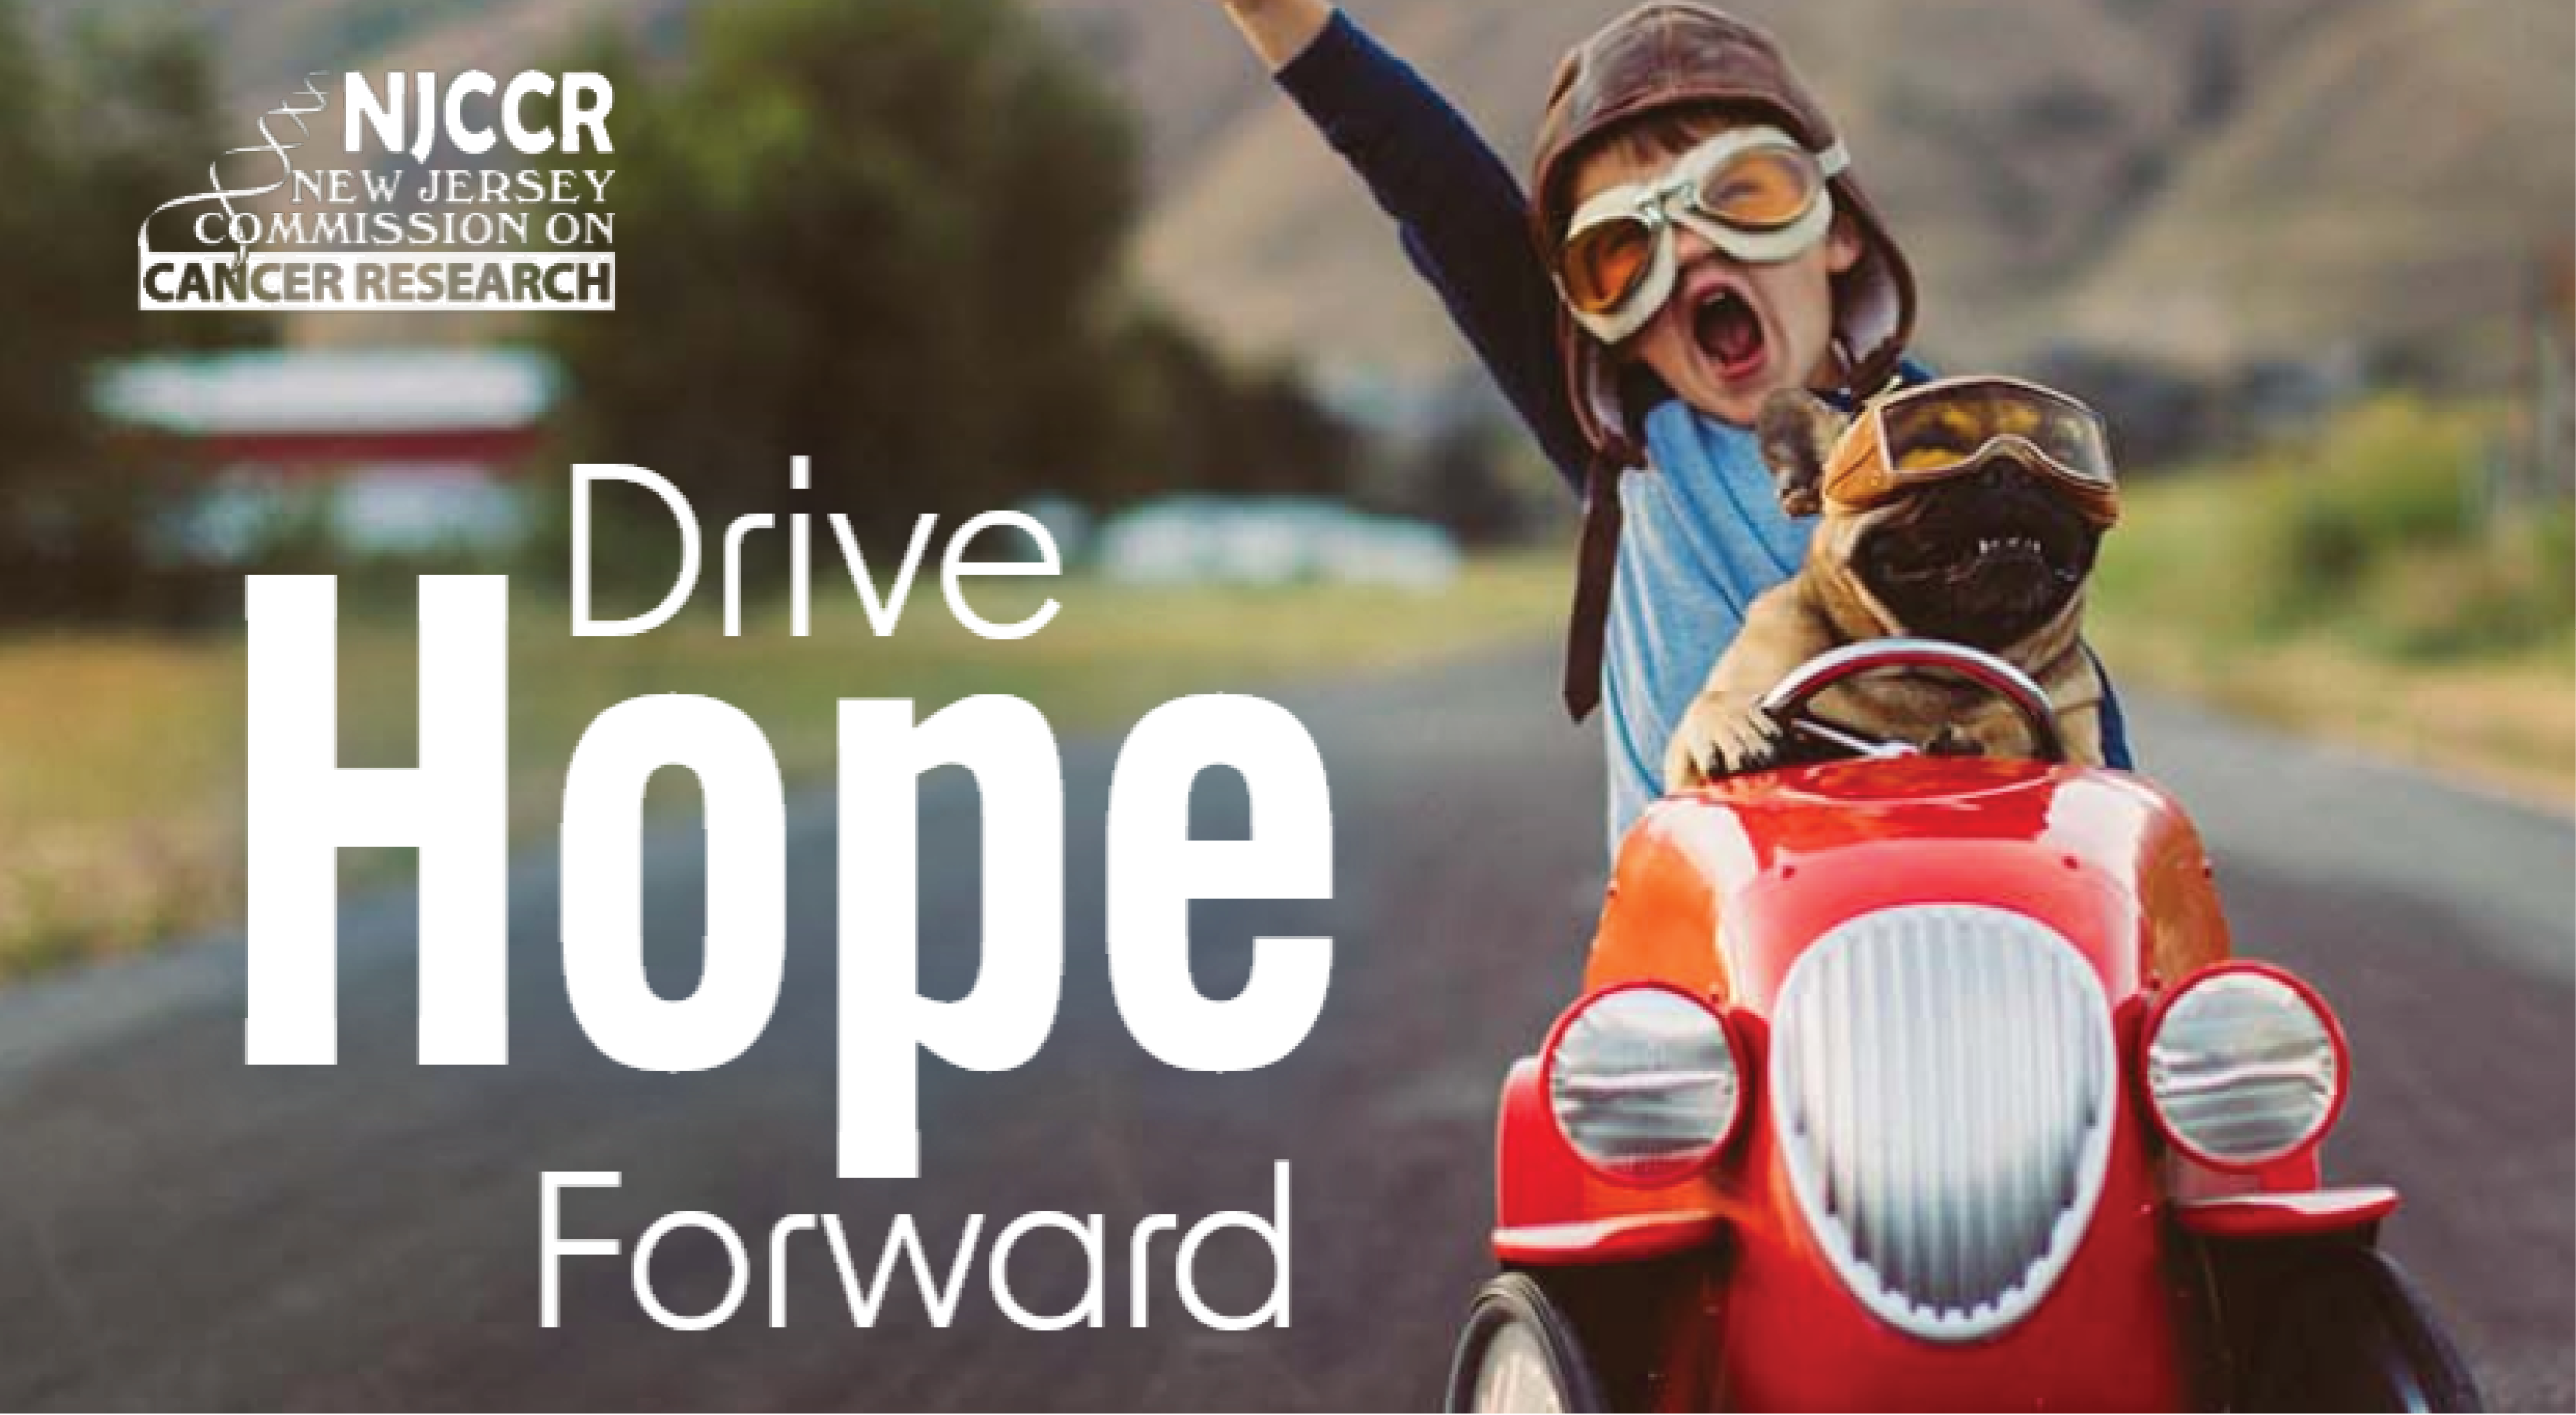 Drive Hope Forward Campaign